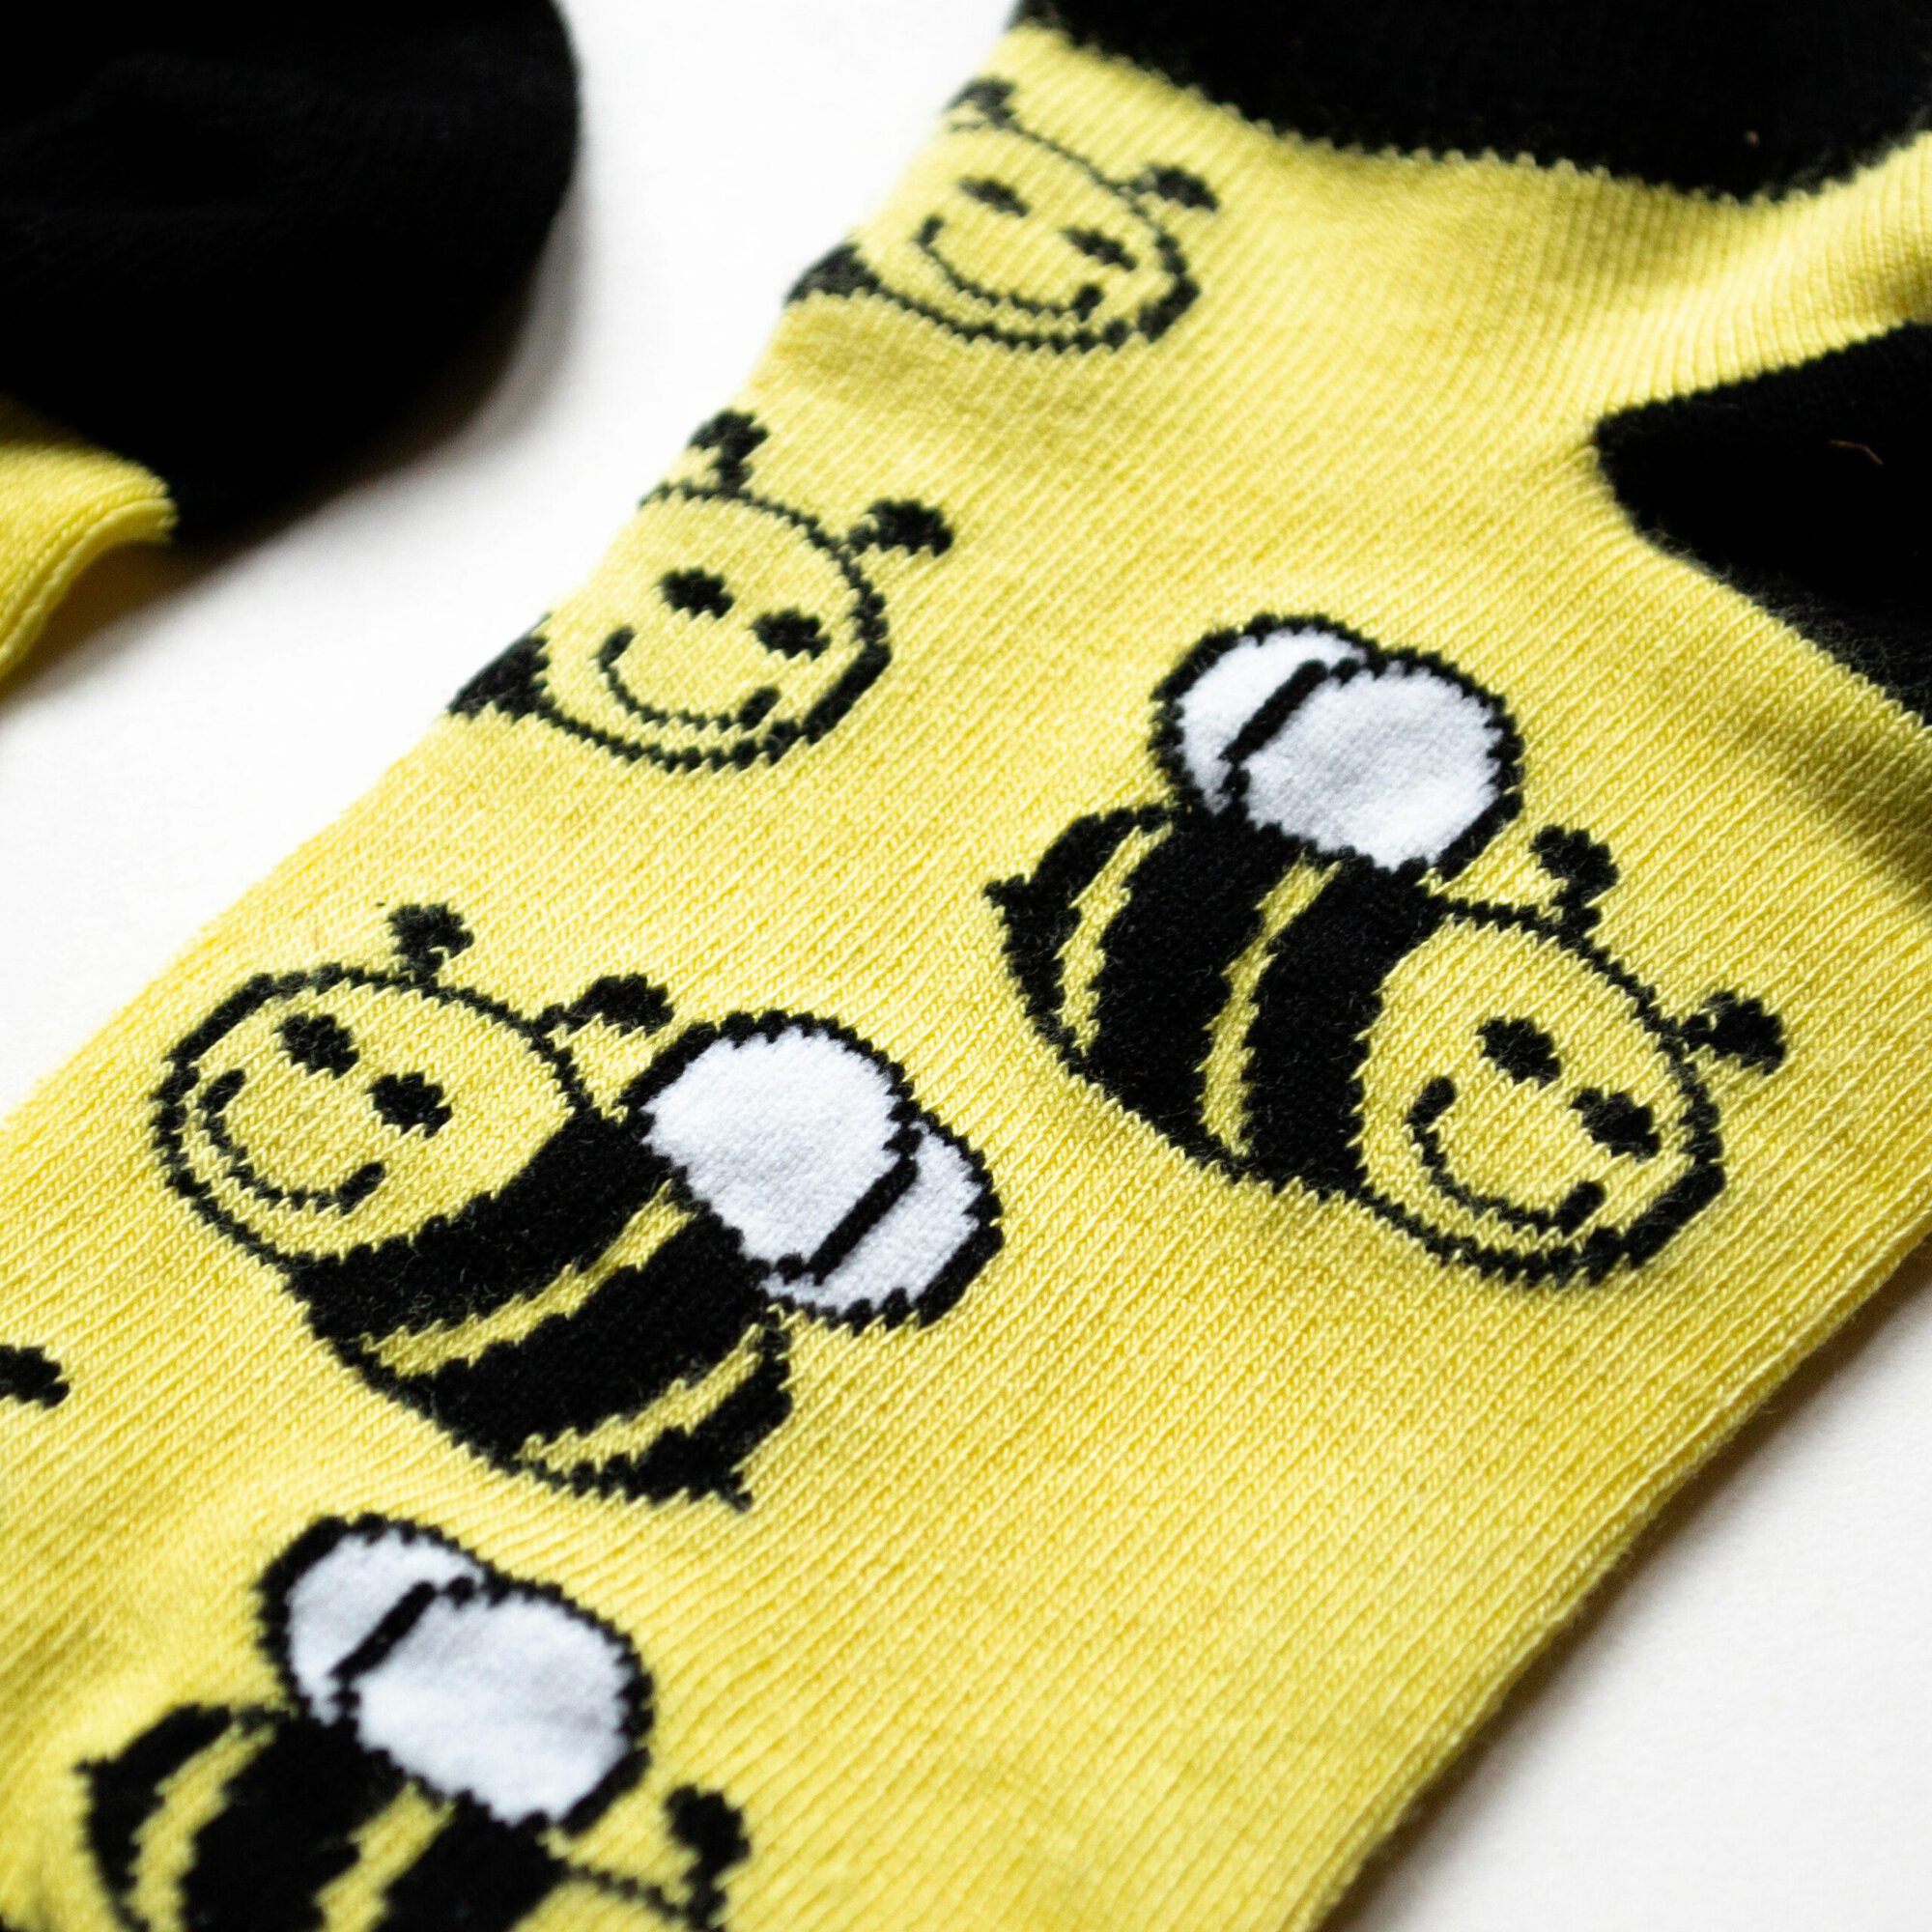 Bumblebee Bamboo Trainer Socks